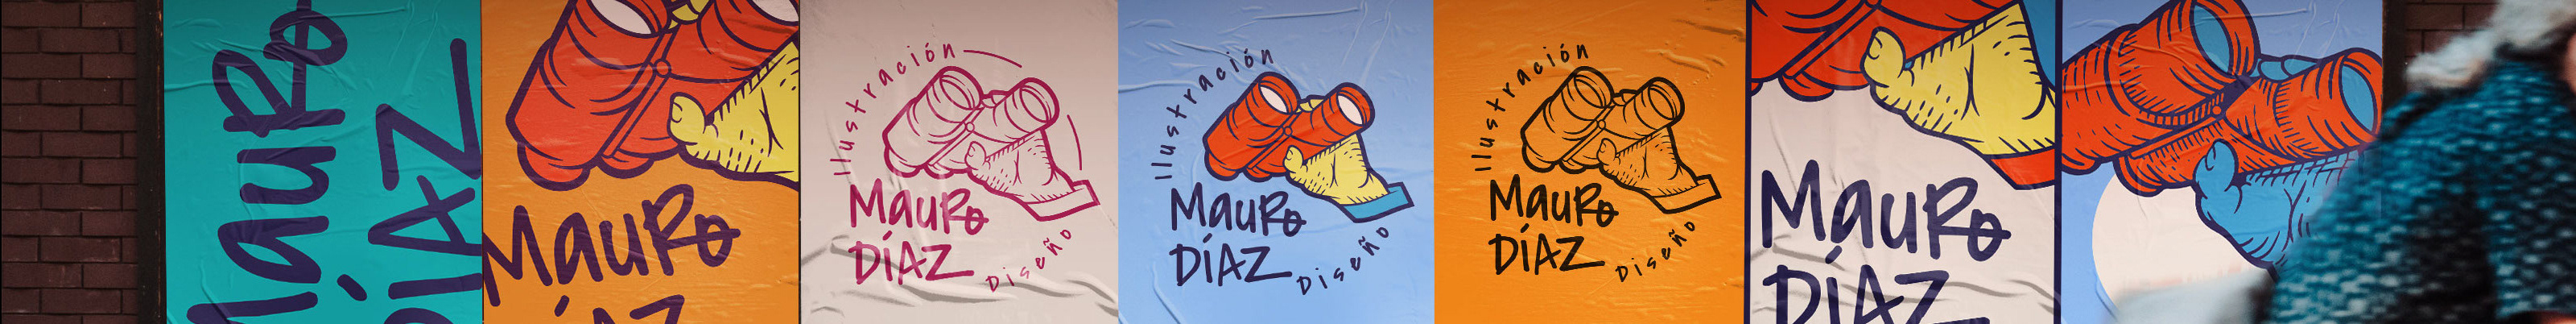 Mauro Díazs profilbanner